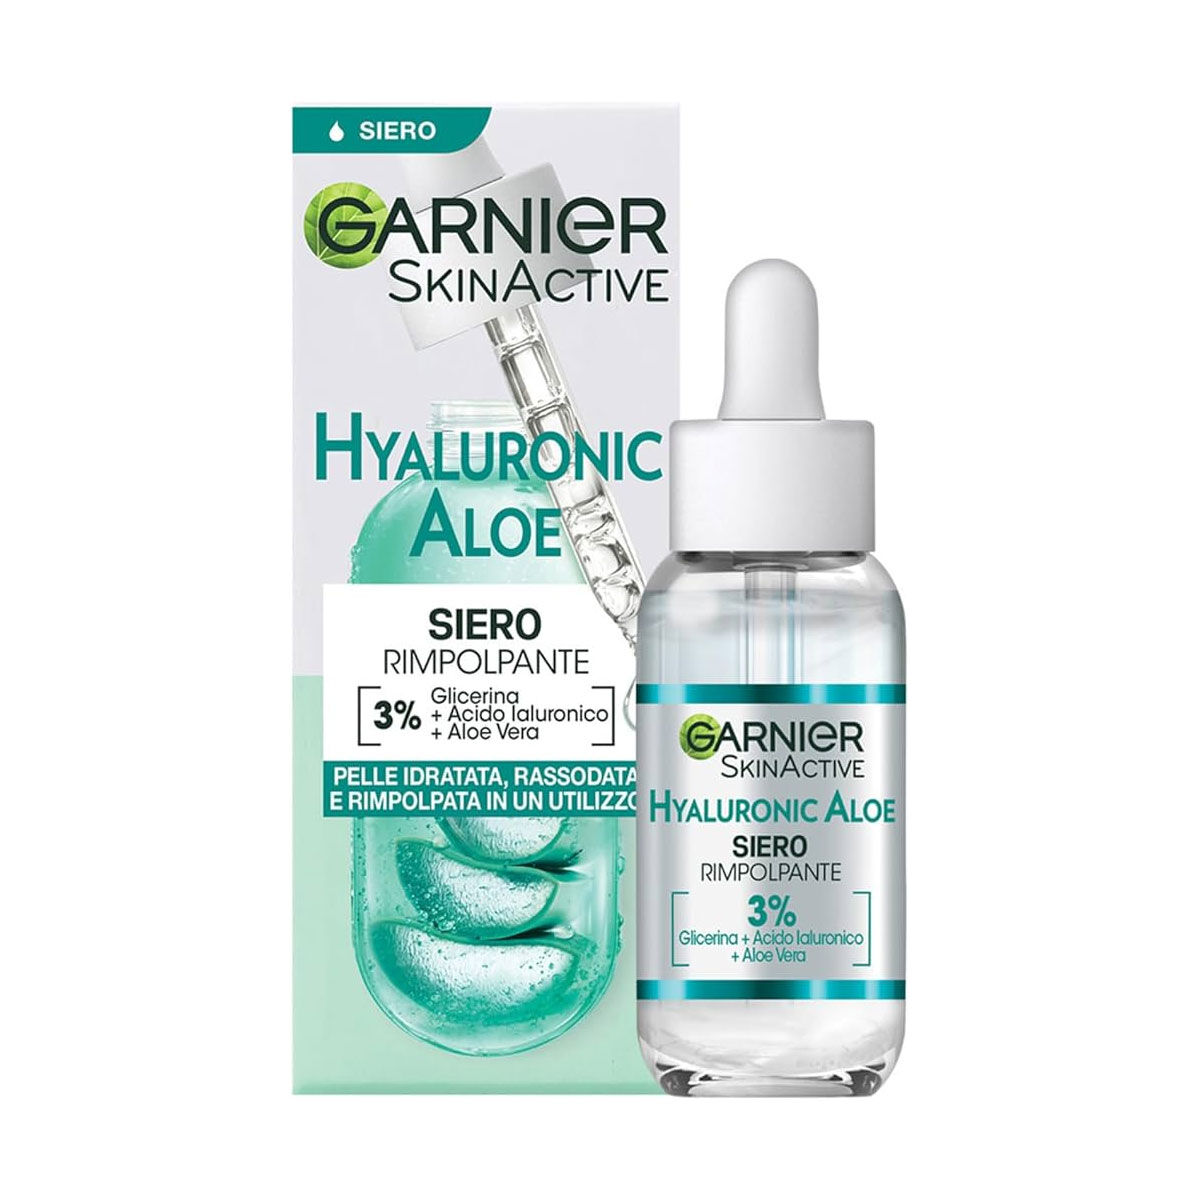 Garnier Skinactive Hyaluronic Aloe Siero Rimpolpante 30ml